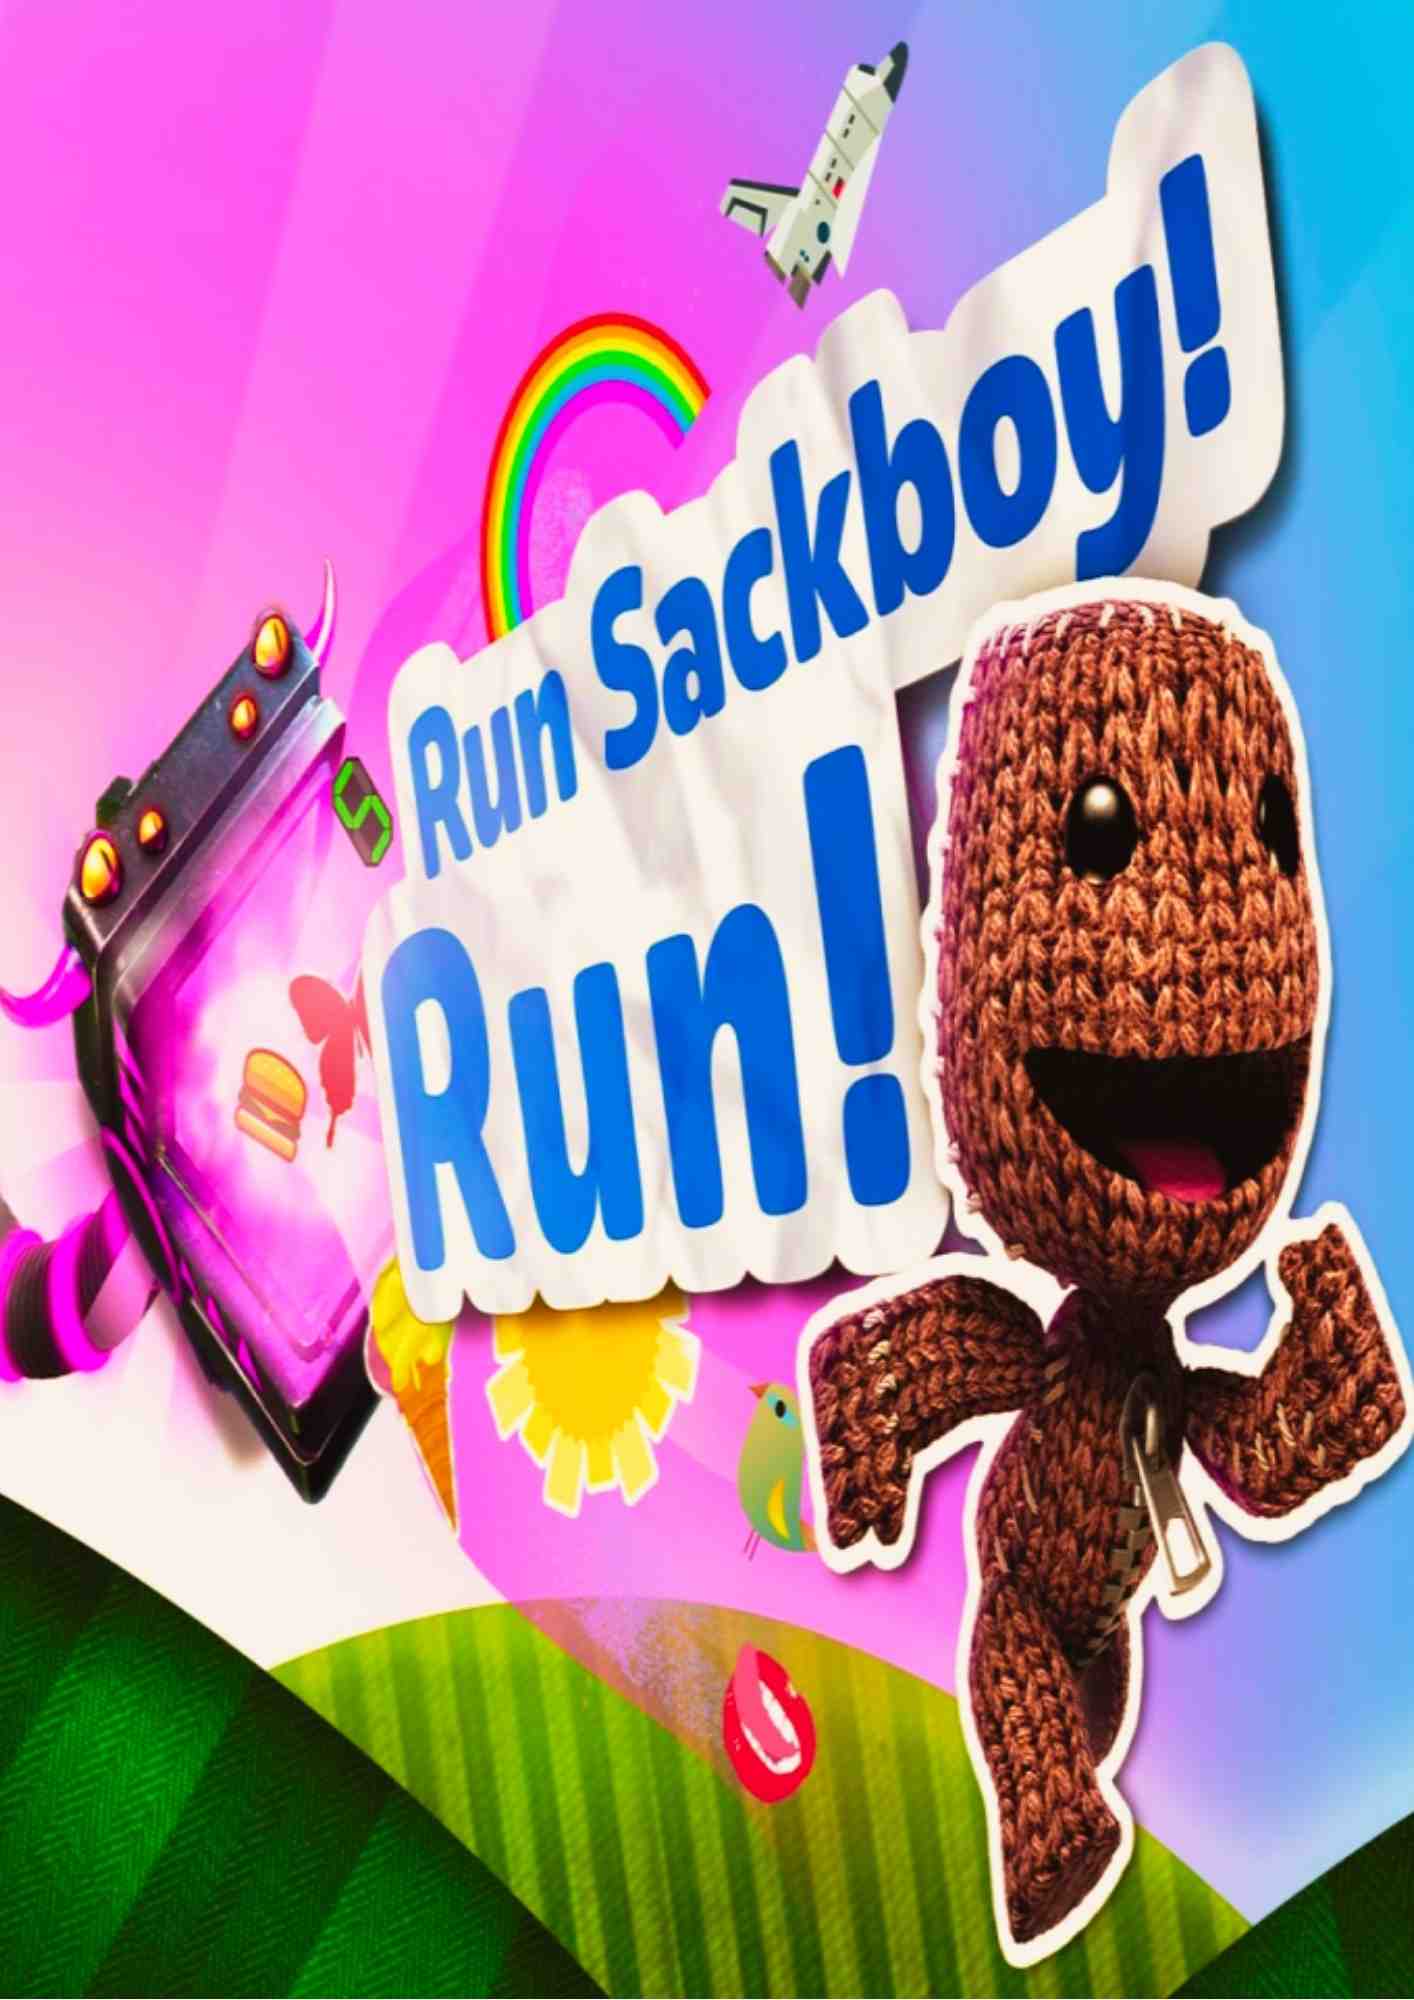 Run SackBoy! Run! – Apps no Google Play